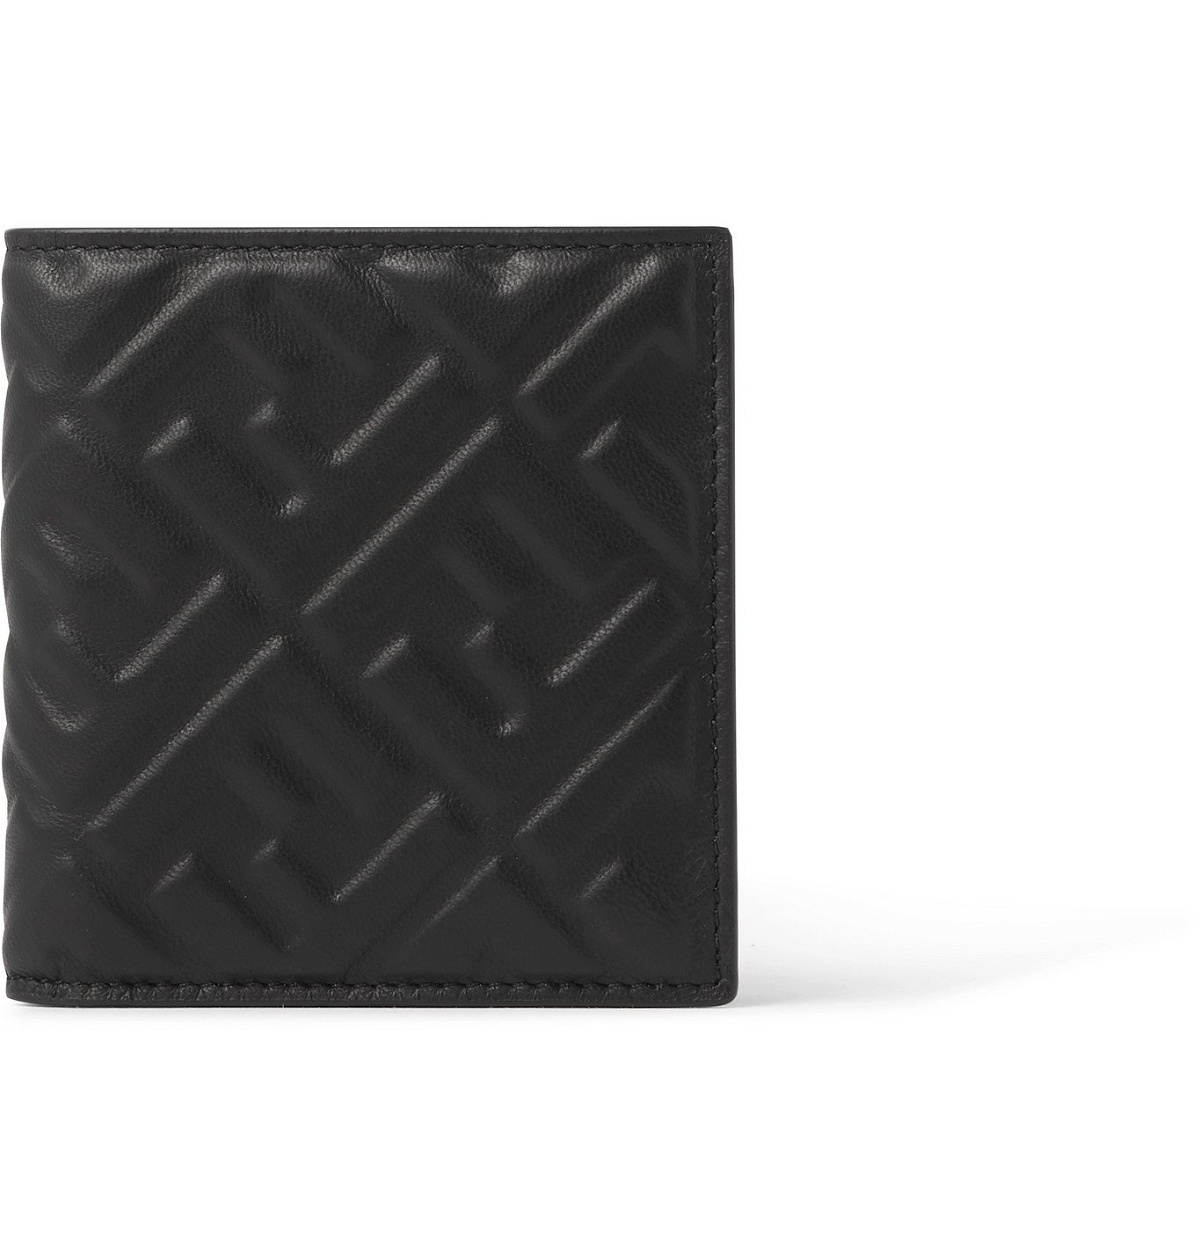 Fendi - Logo-Embossed Leather Billfold Wallet - Black Fendi